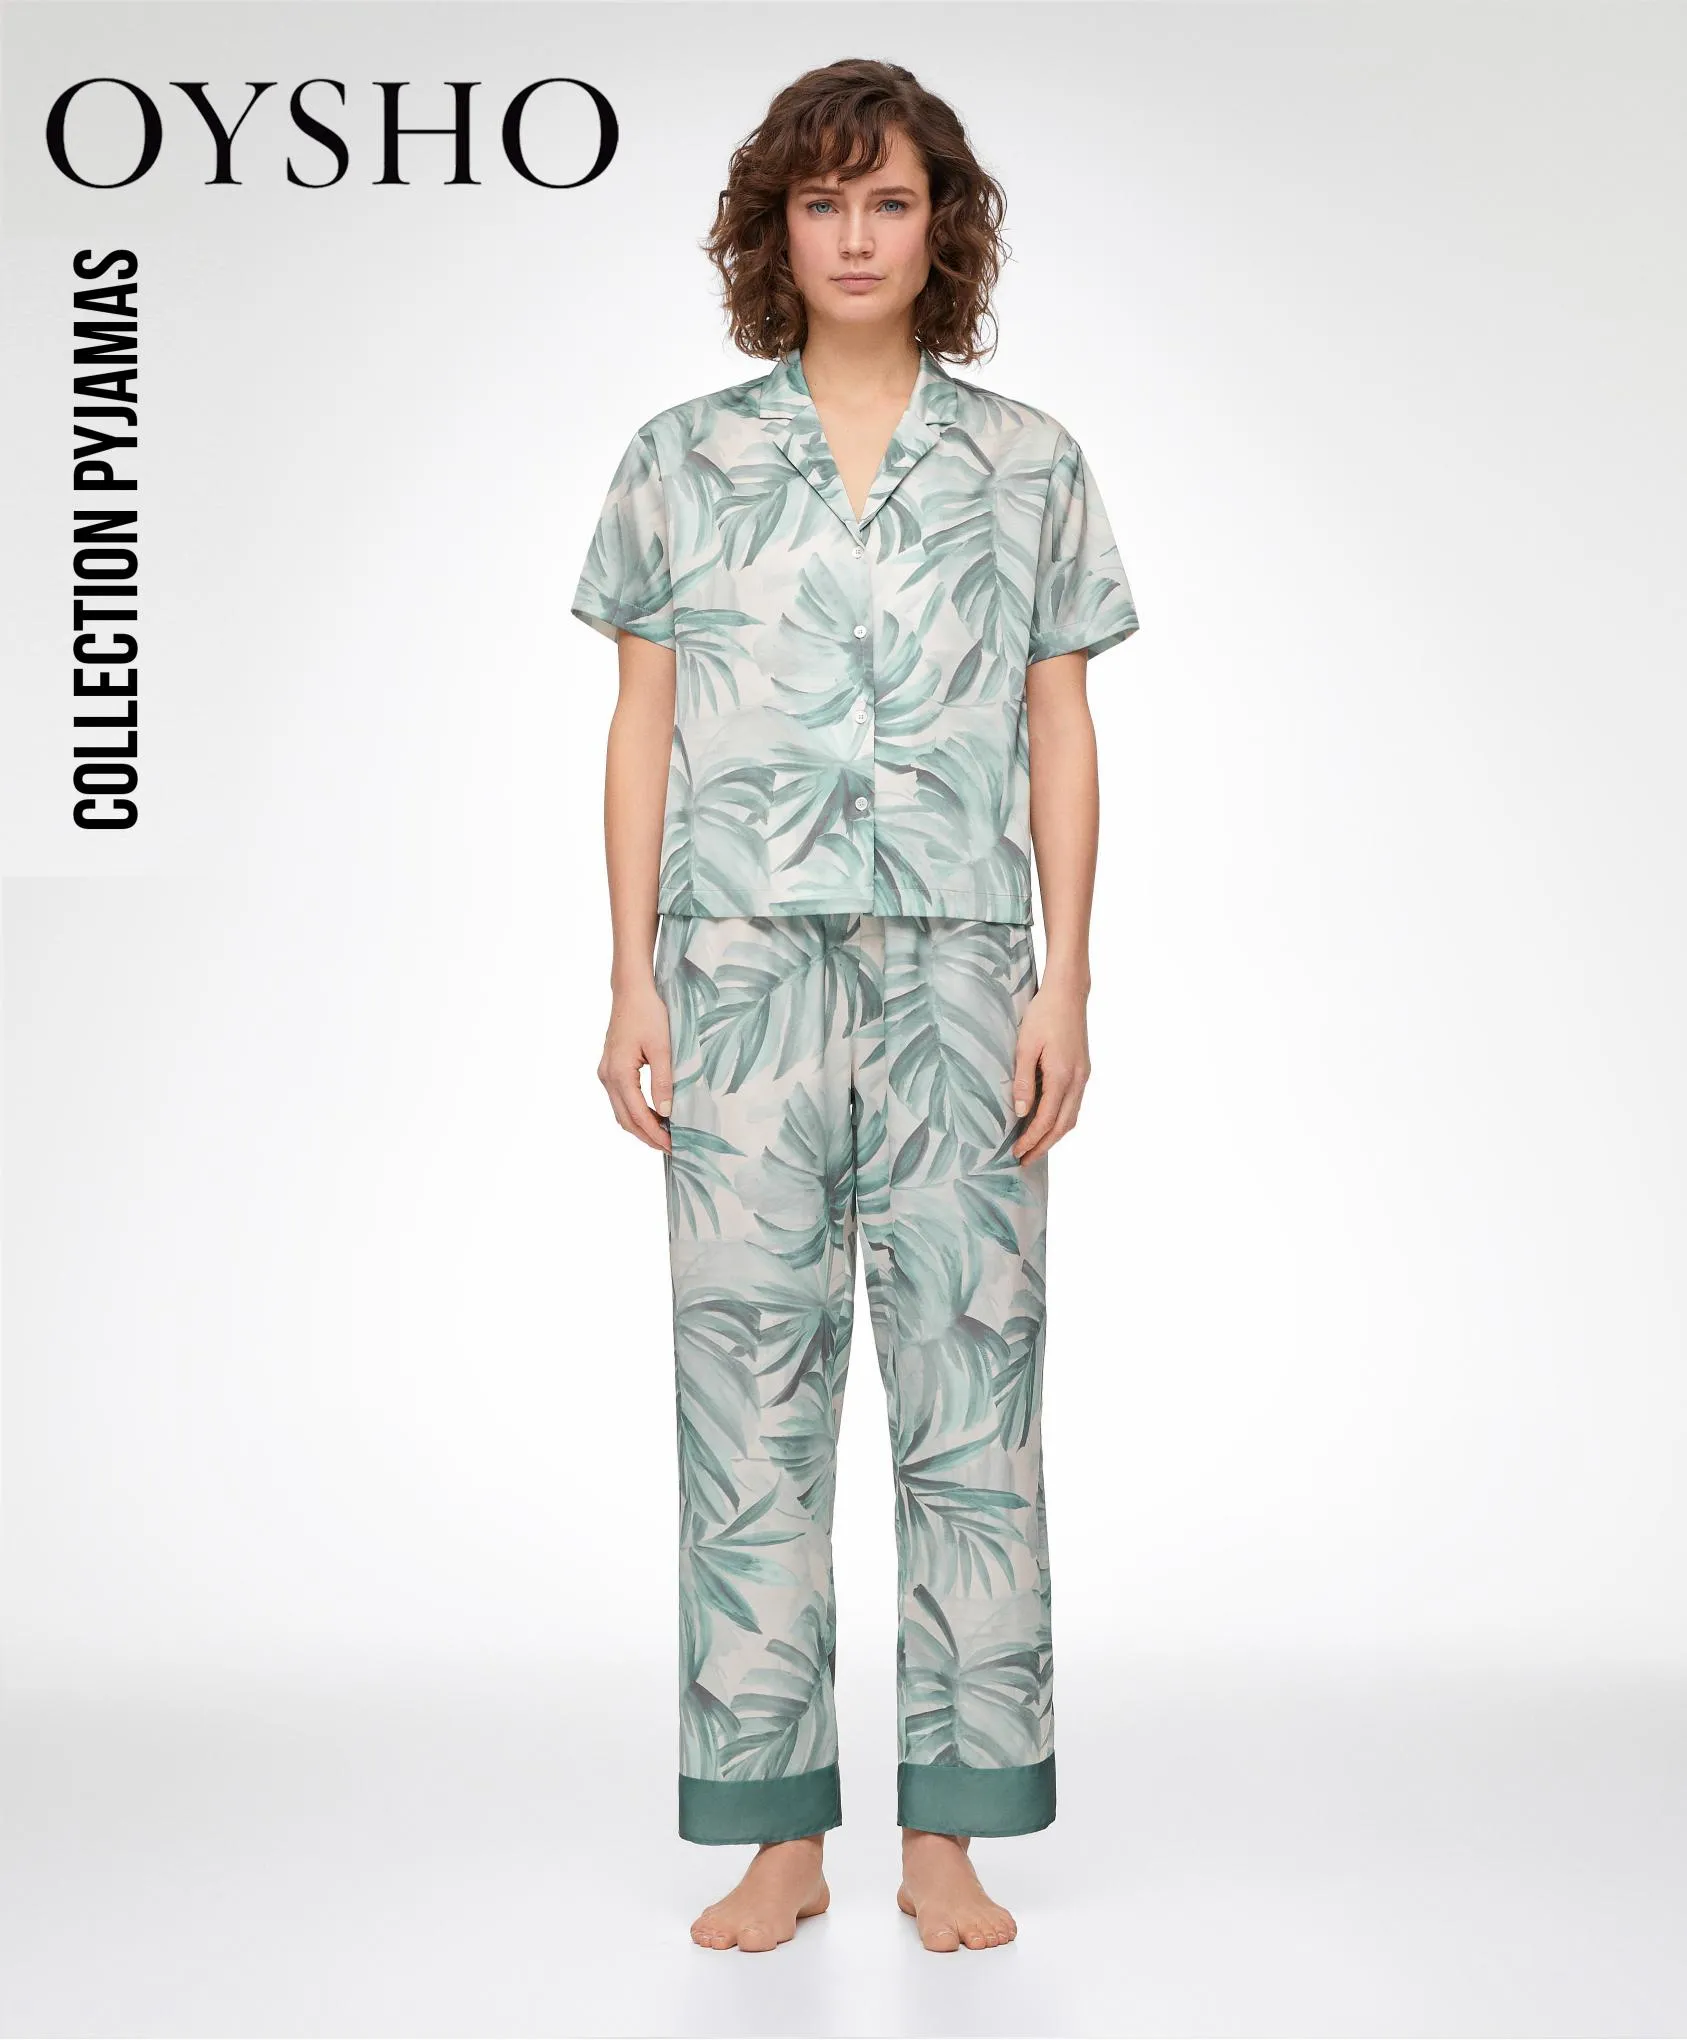 Catalogue Collection Pyjamas, page 00001